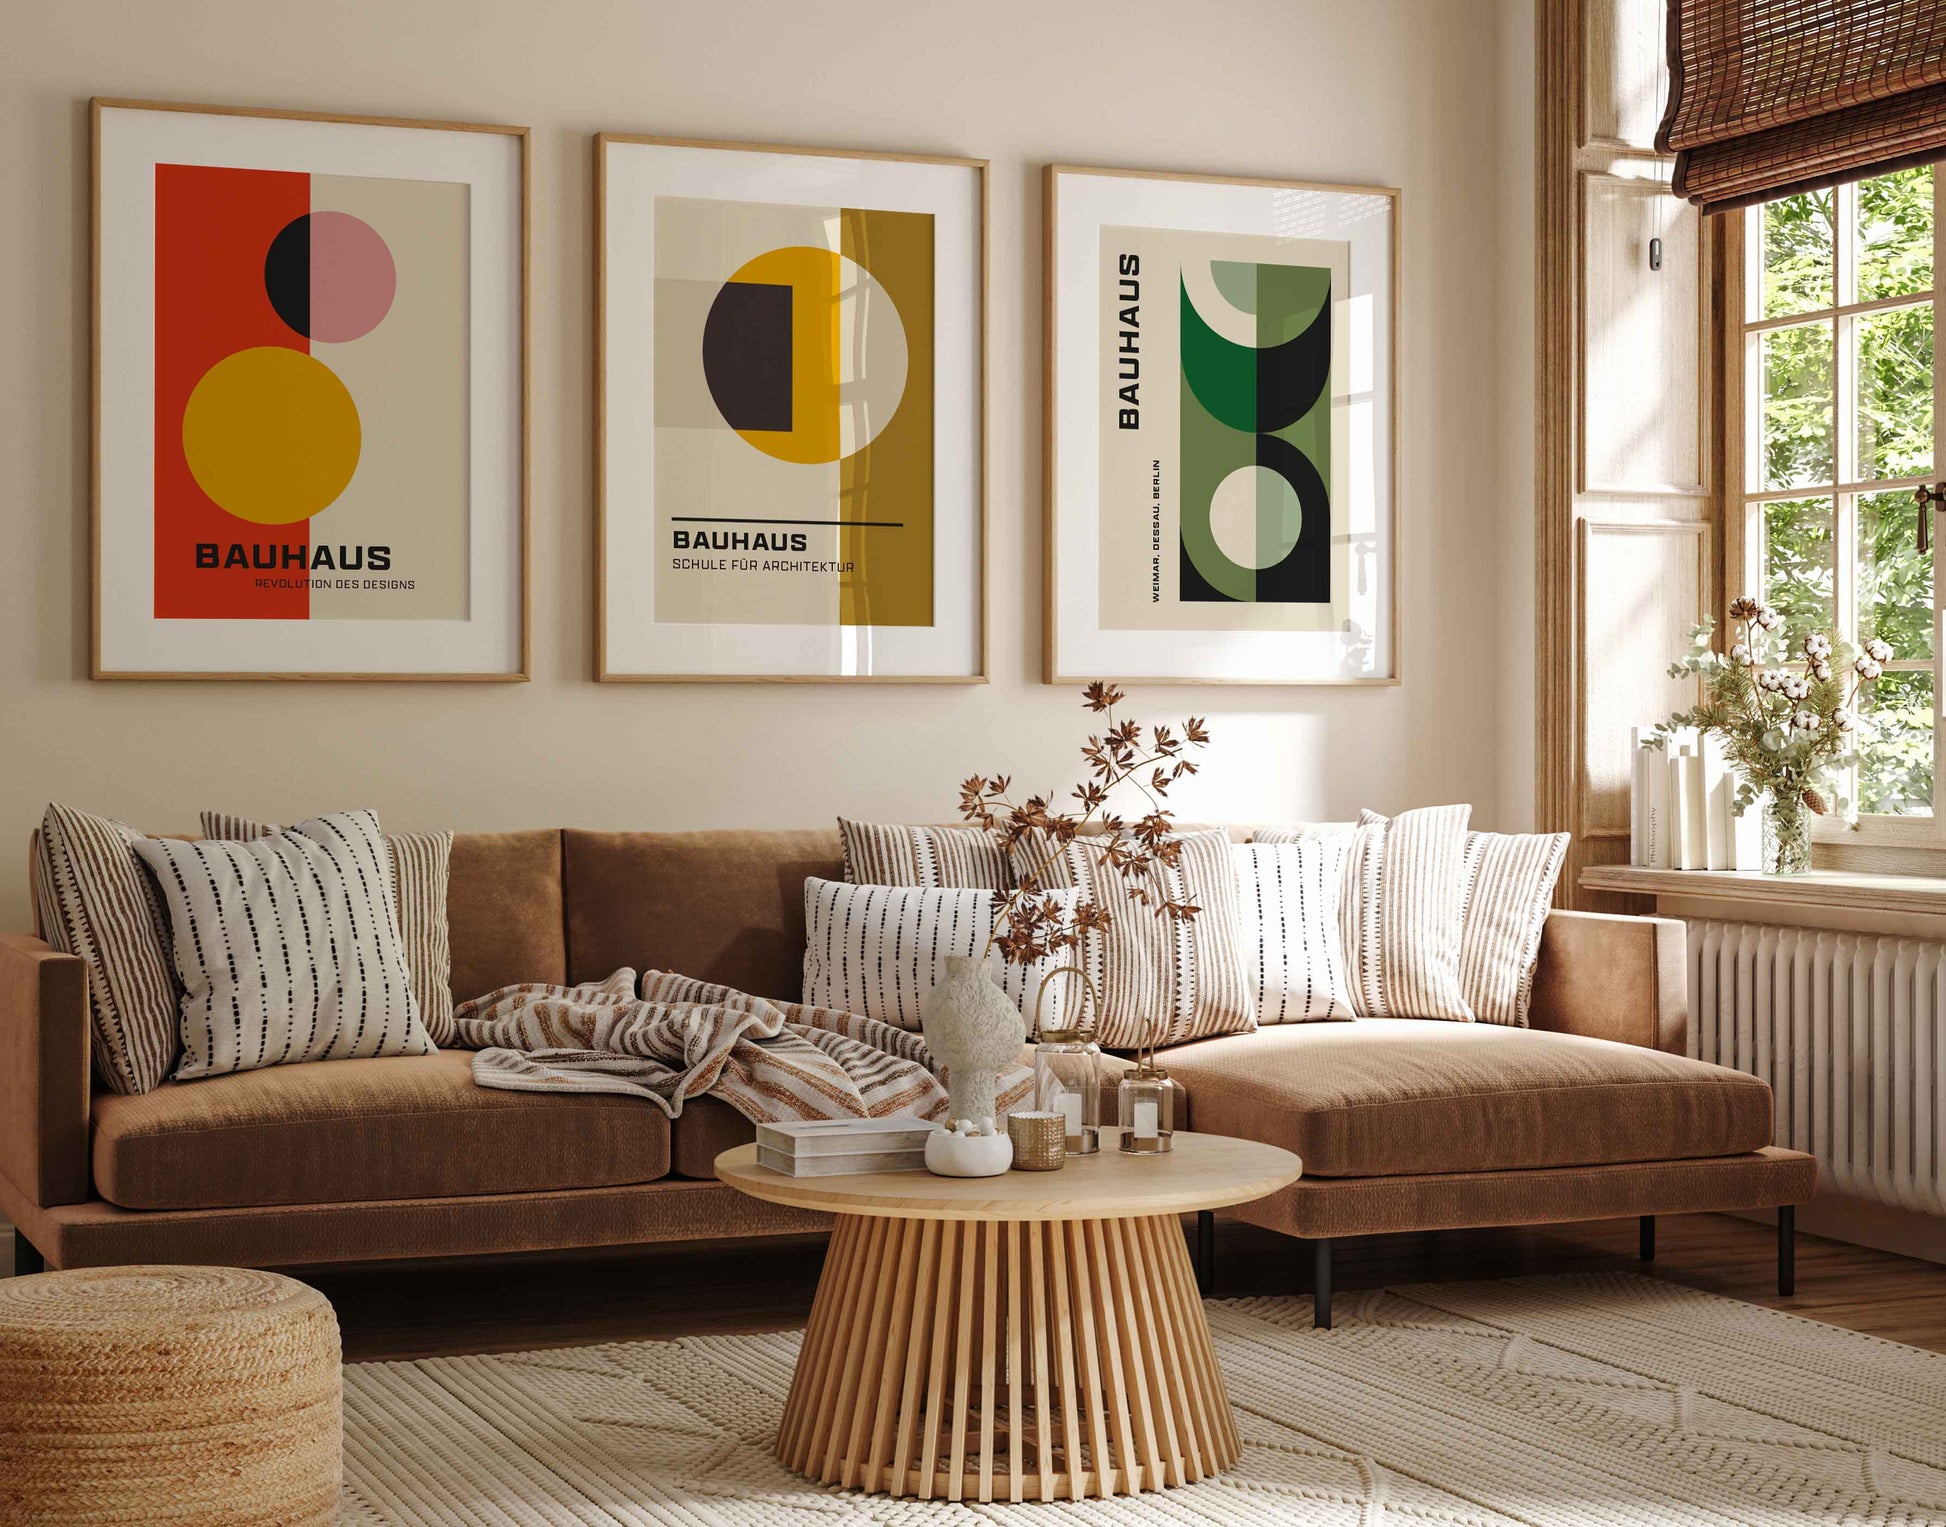 Bauhaus posters, set of 3 prints